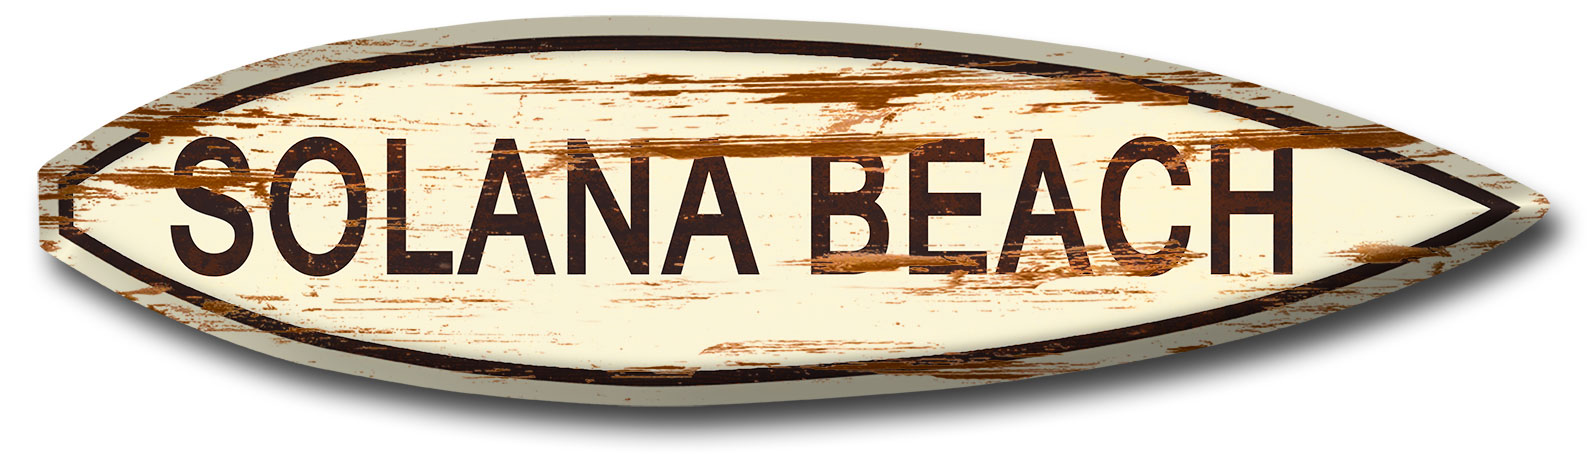 Solana Beach Surf Board Wood Print Vintage Sign